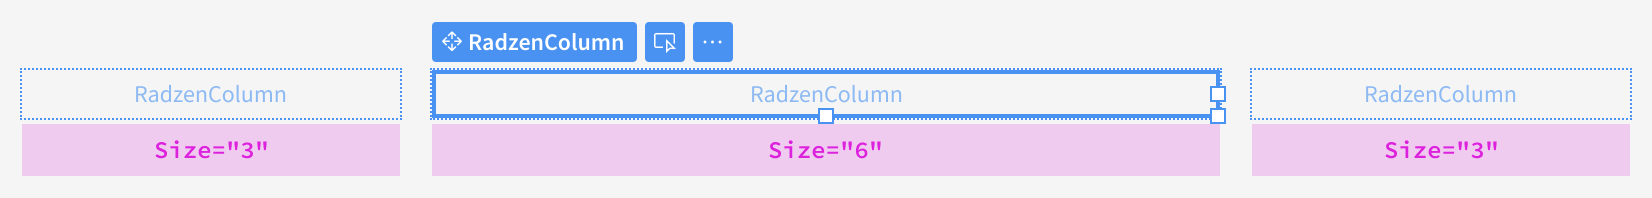 RadzenColumn Size property